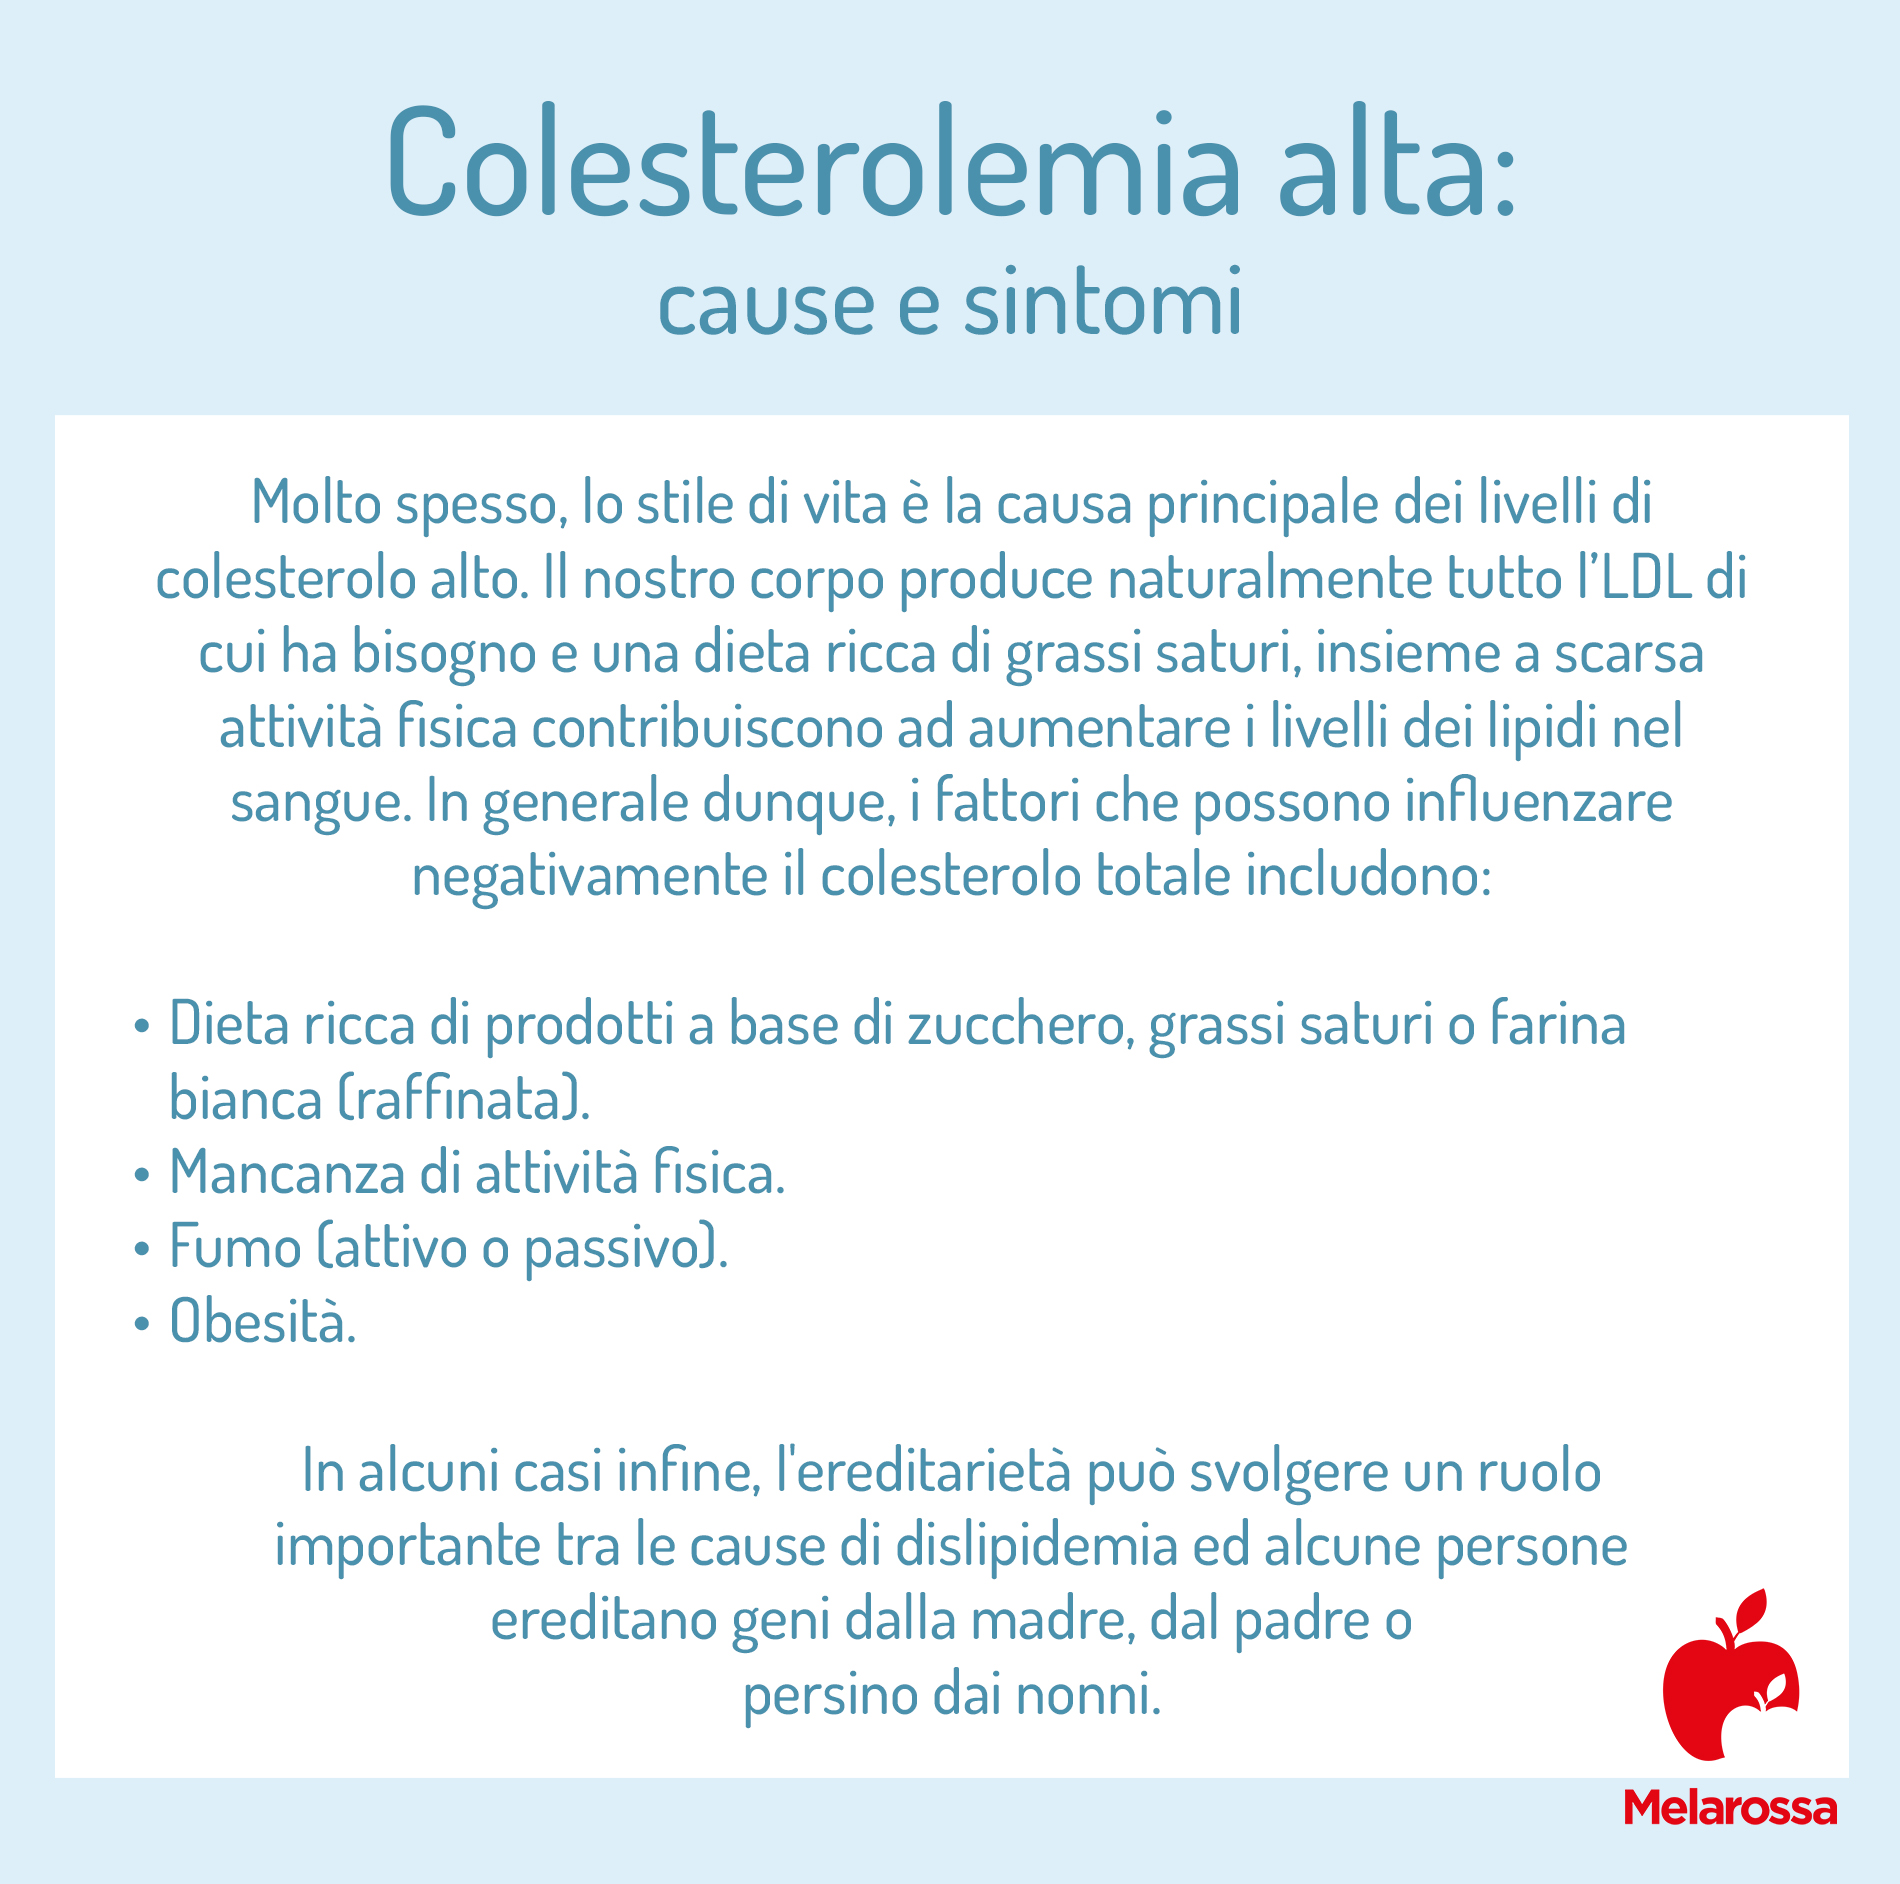 colesterolemia alta: cause e sintomi 